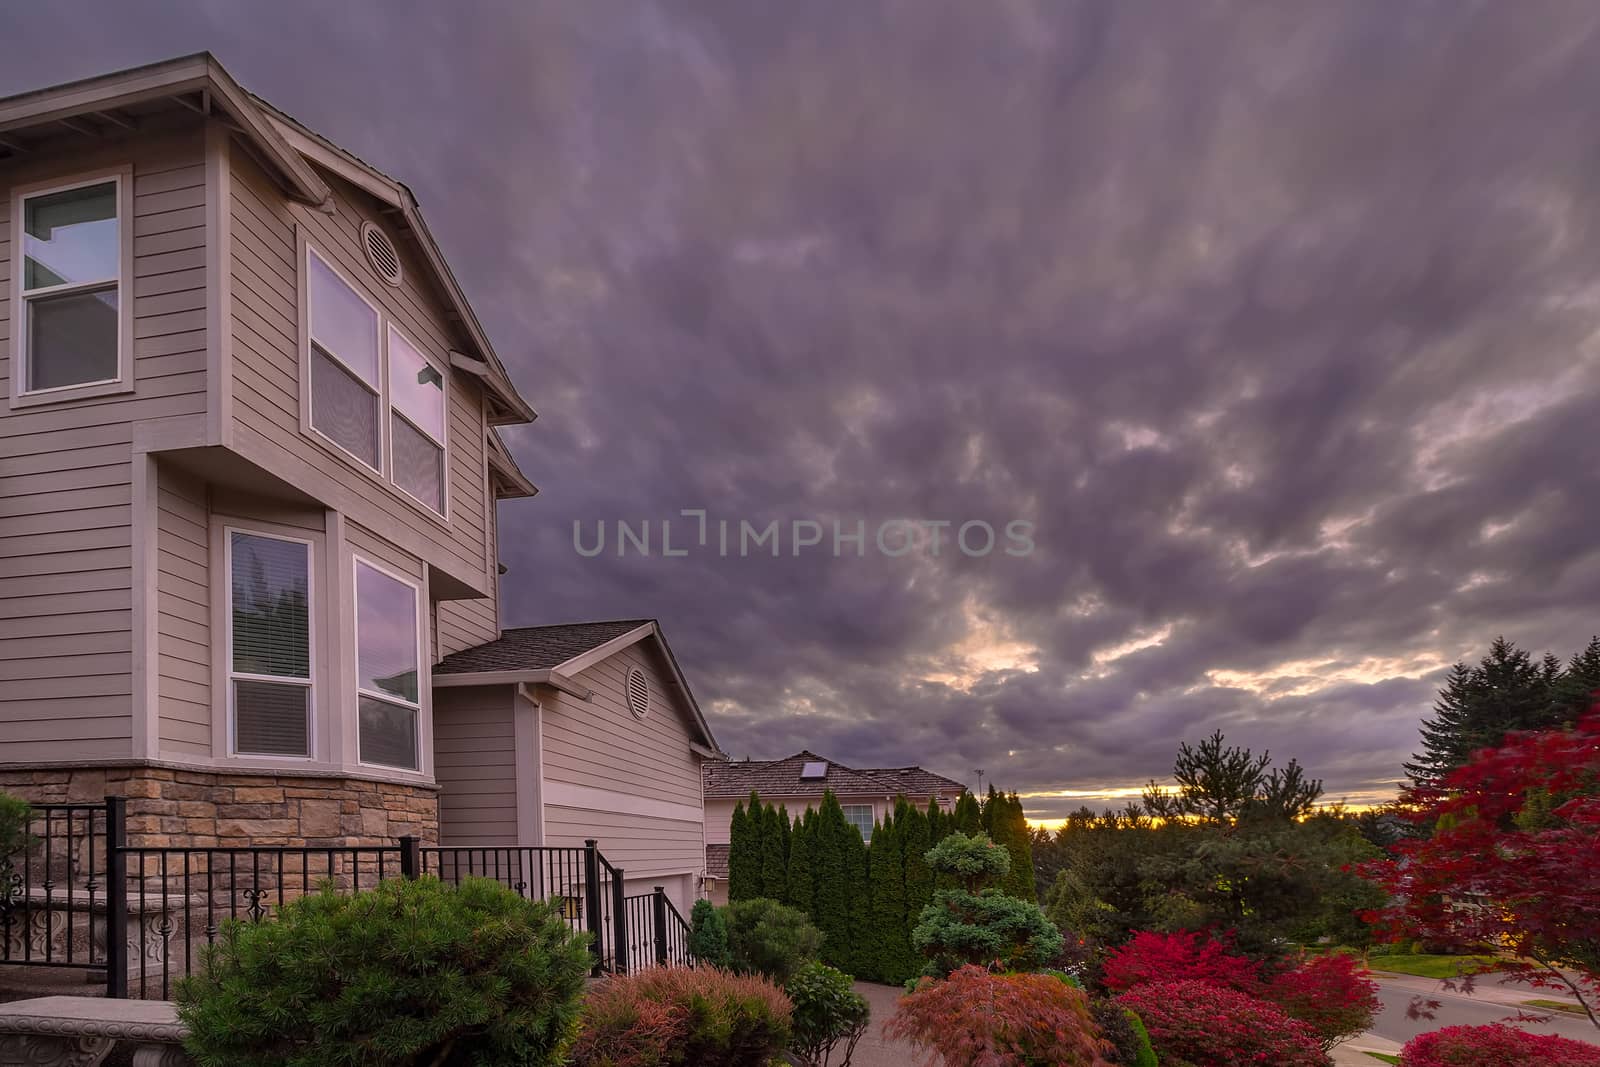 Stormy Sky over Homes in Suburban Neighborhood by jpldesigns